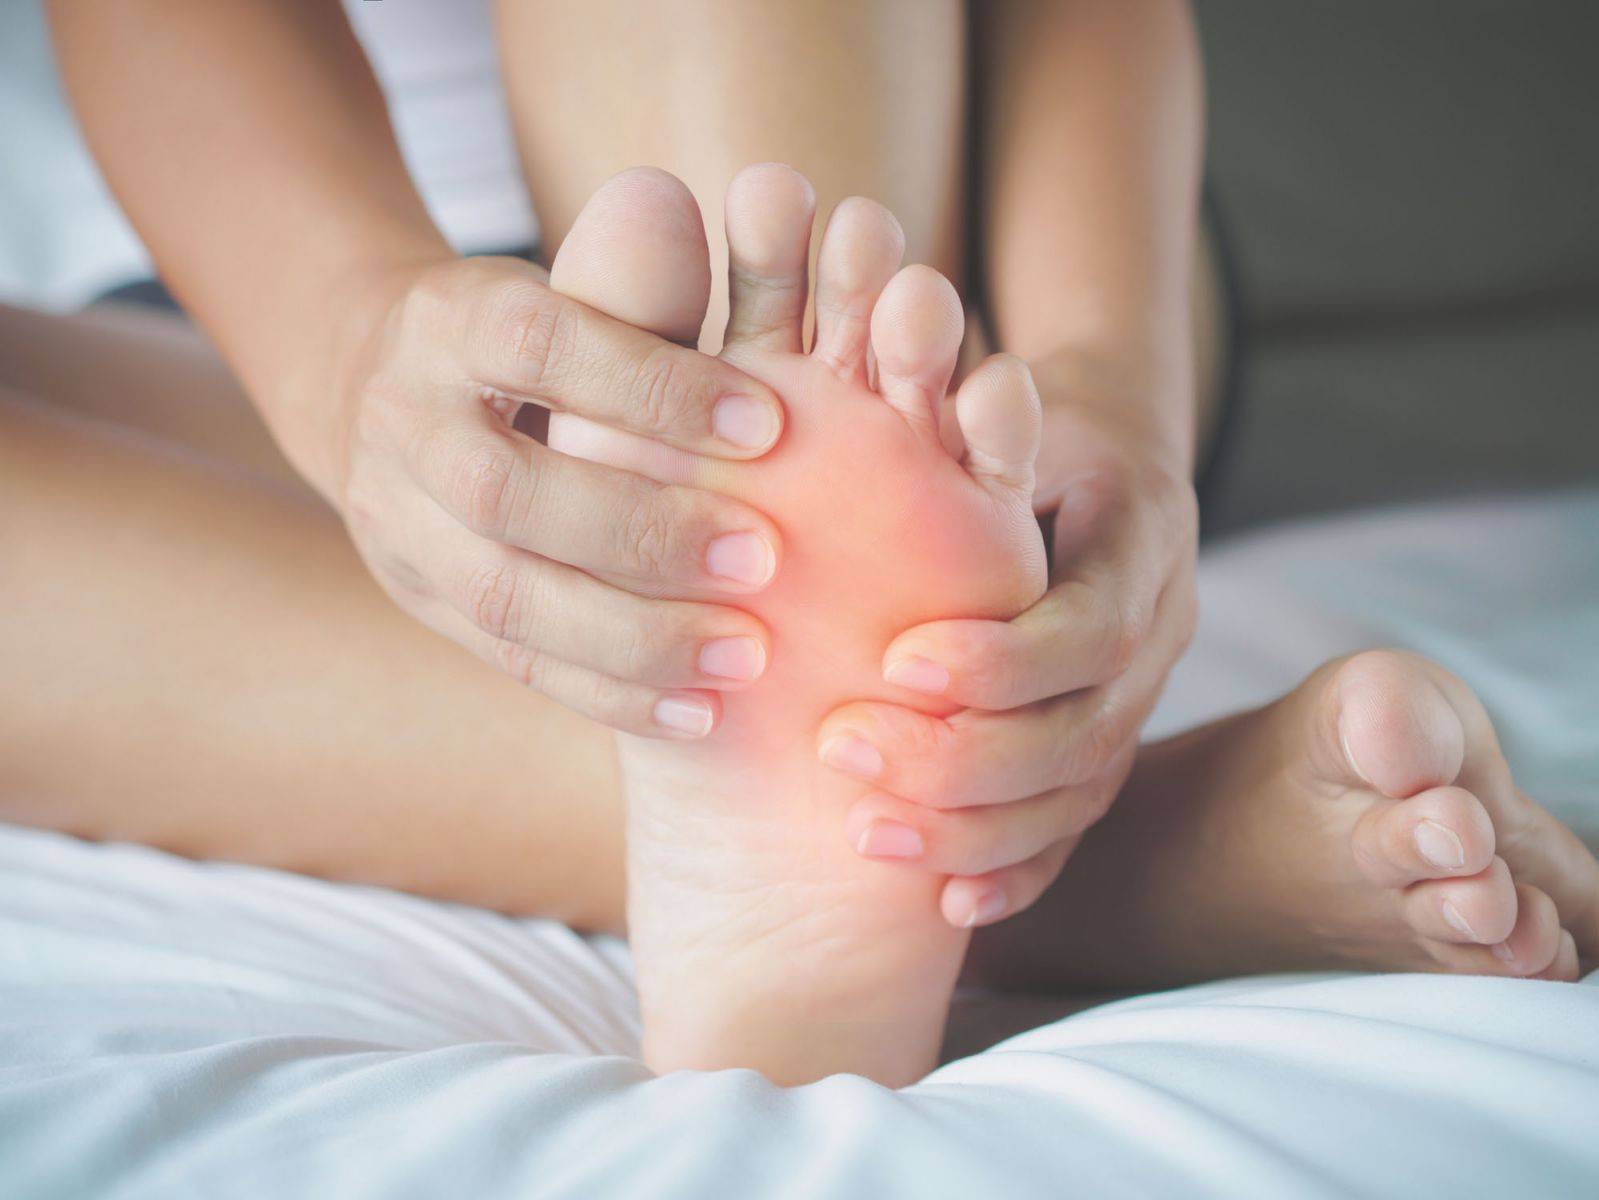 soles pain causes